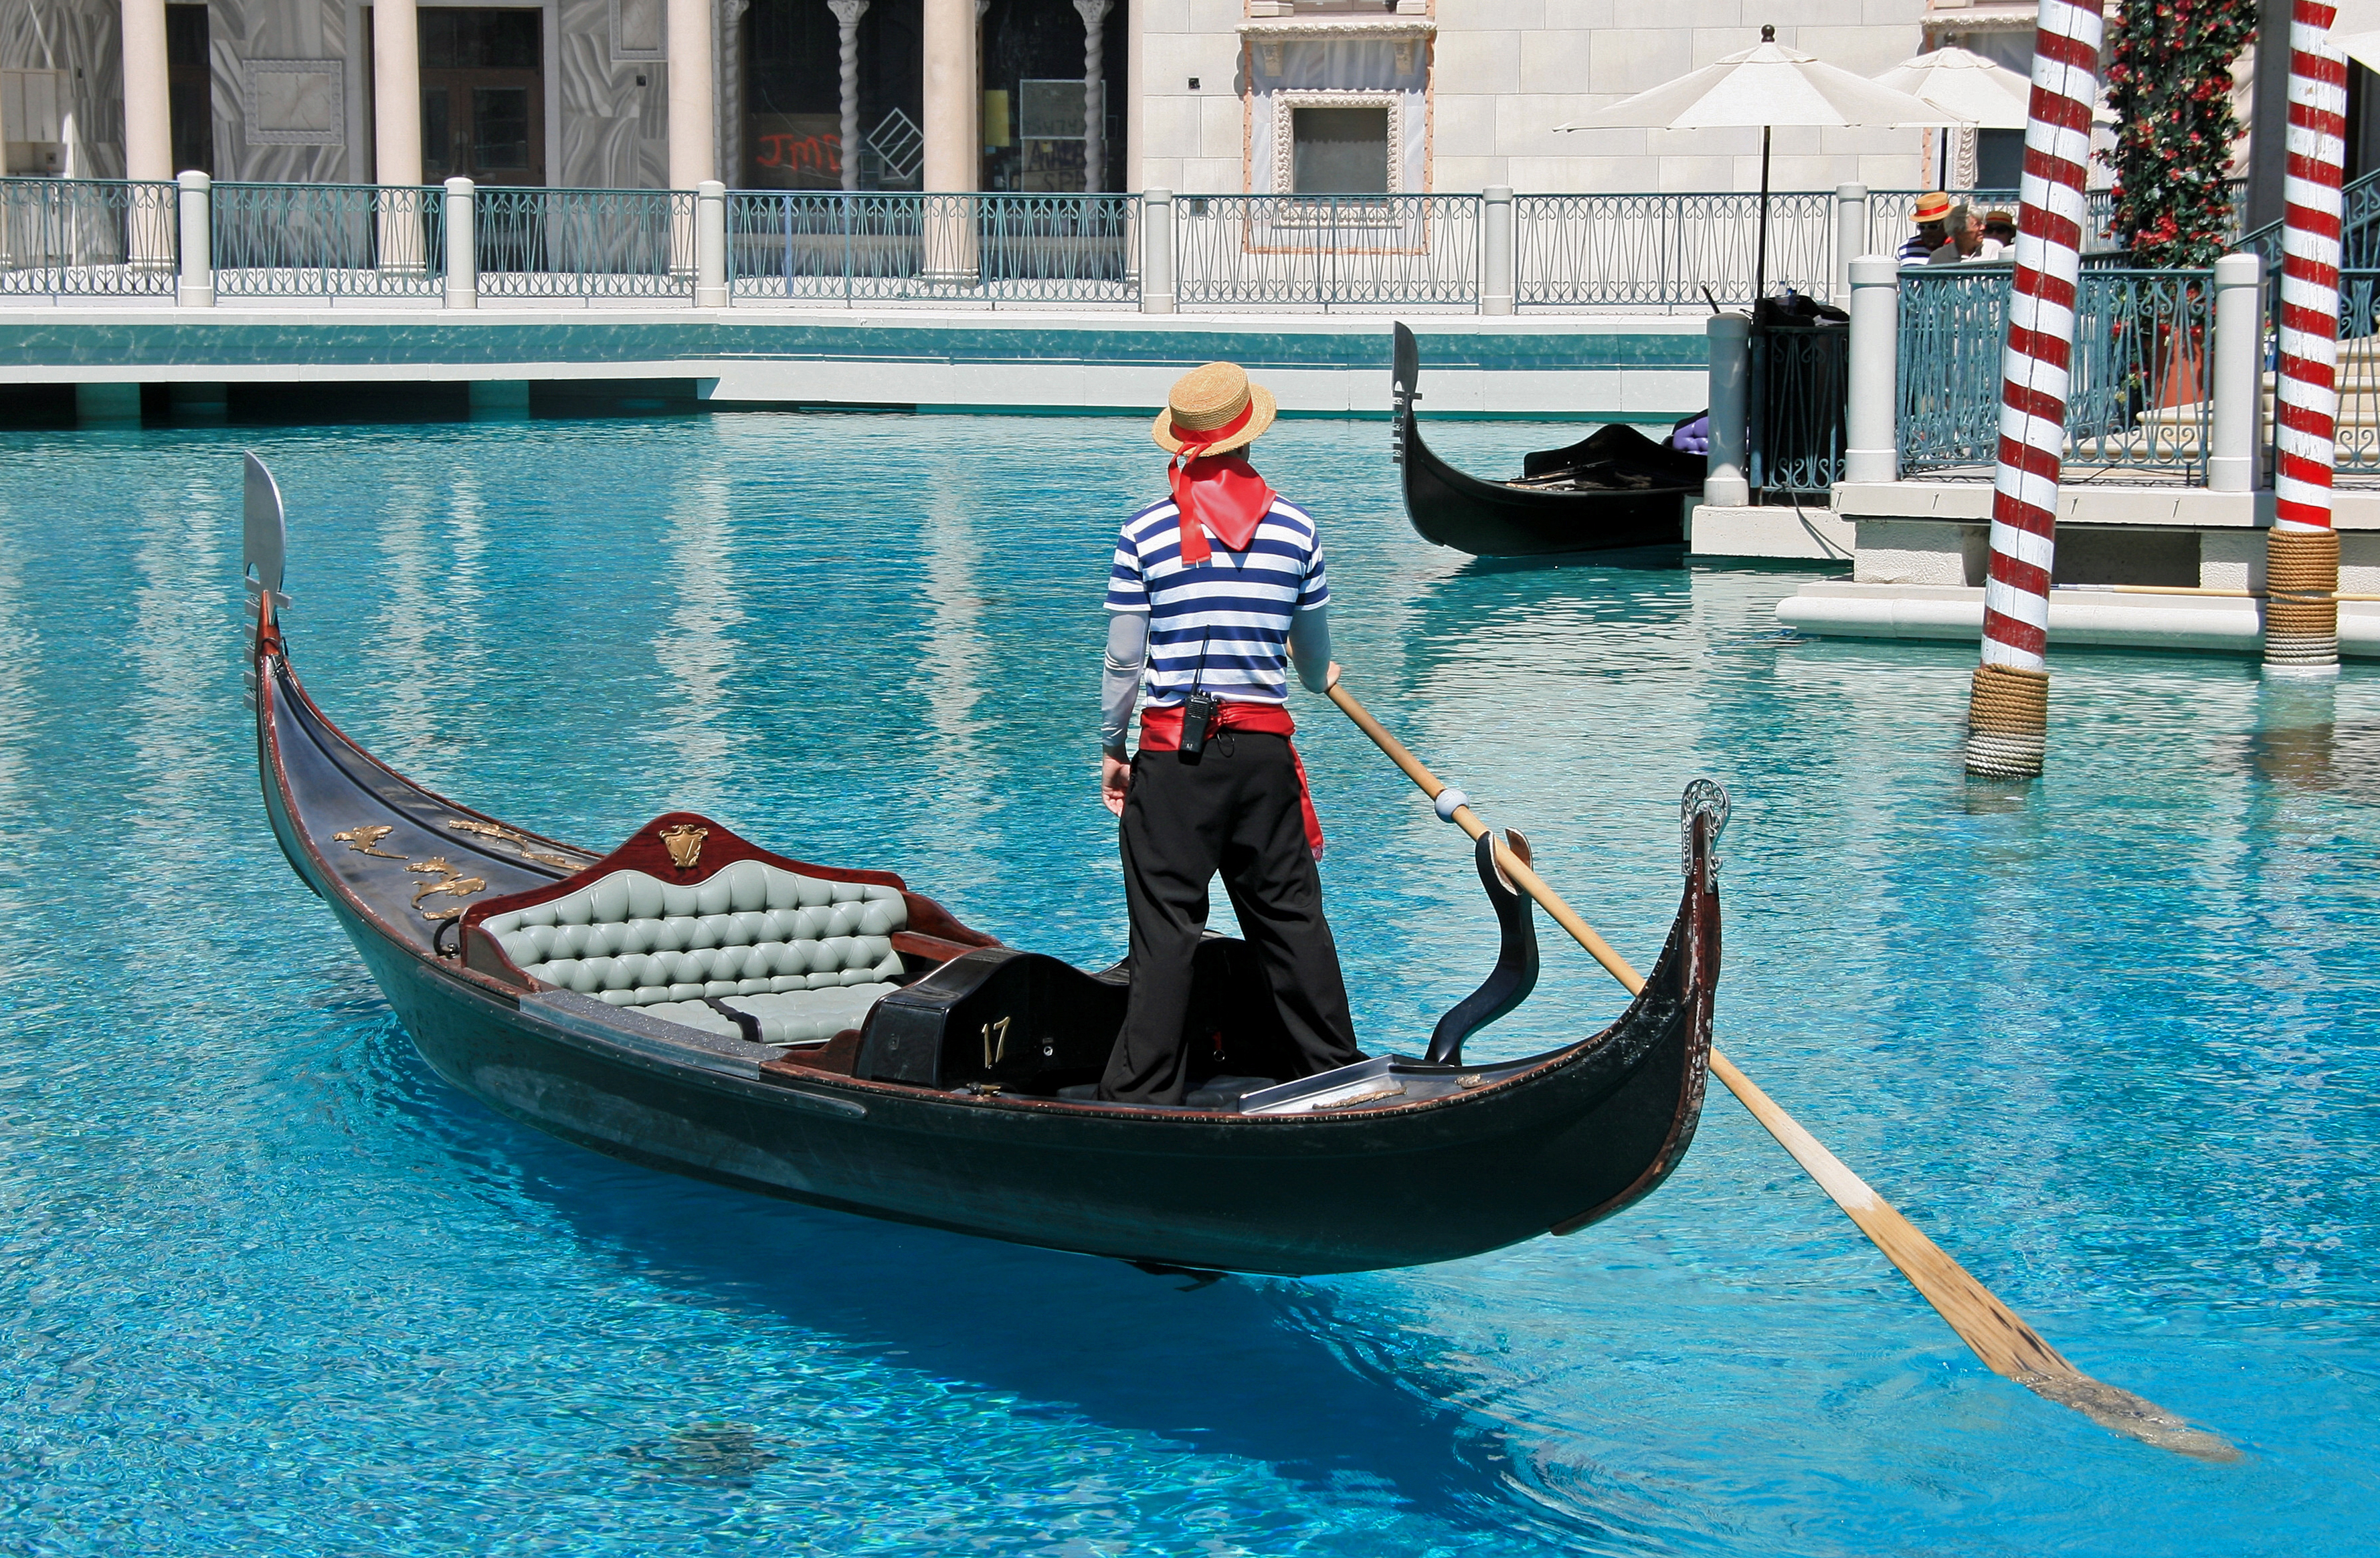 File:Gondola at the Venetian.jpg - Wikimedia Commons